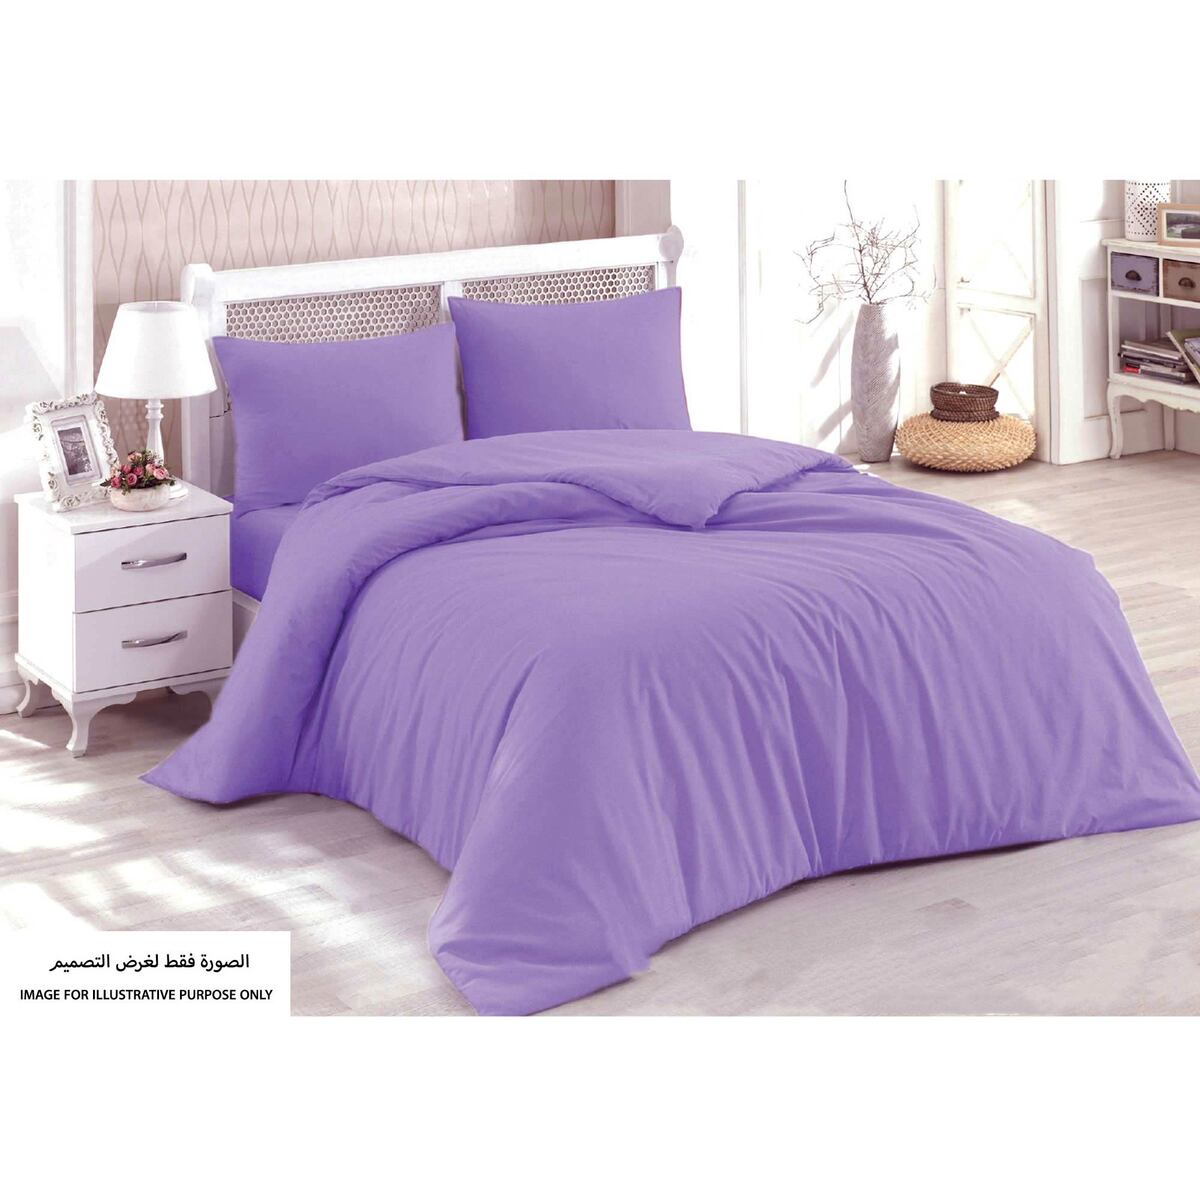 Homewell Bed Sheet Single 2 pc Set Lilac